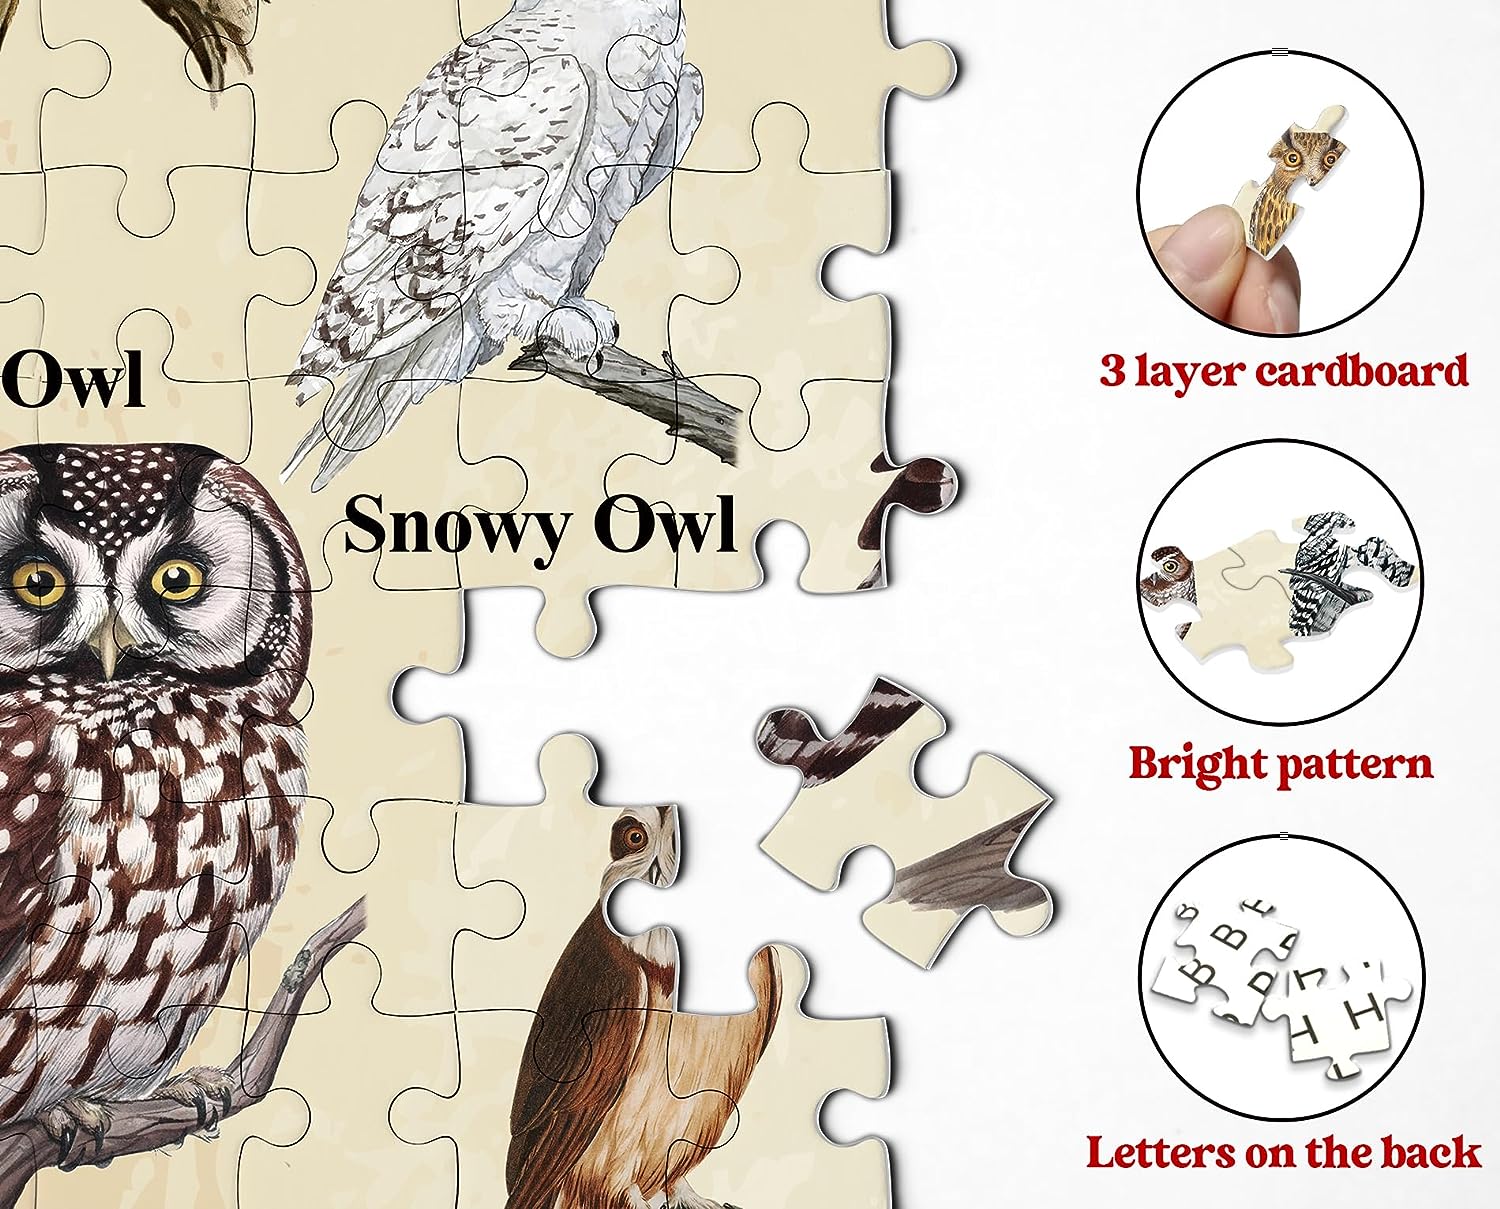 Pickforu® Owl Jigsaw Puzzle 1000 Pieces